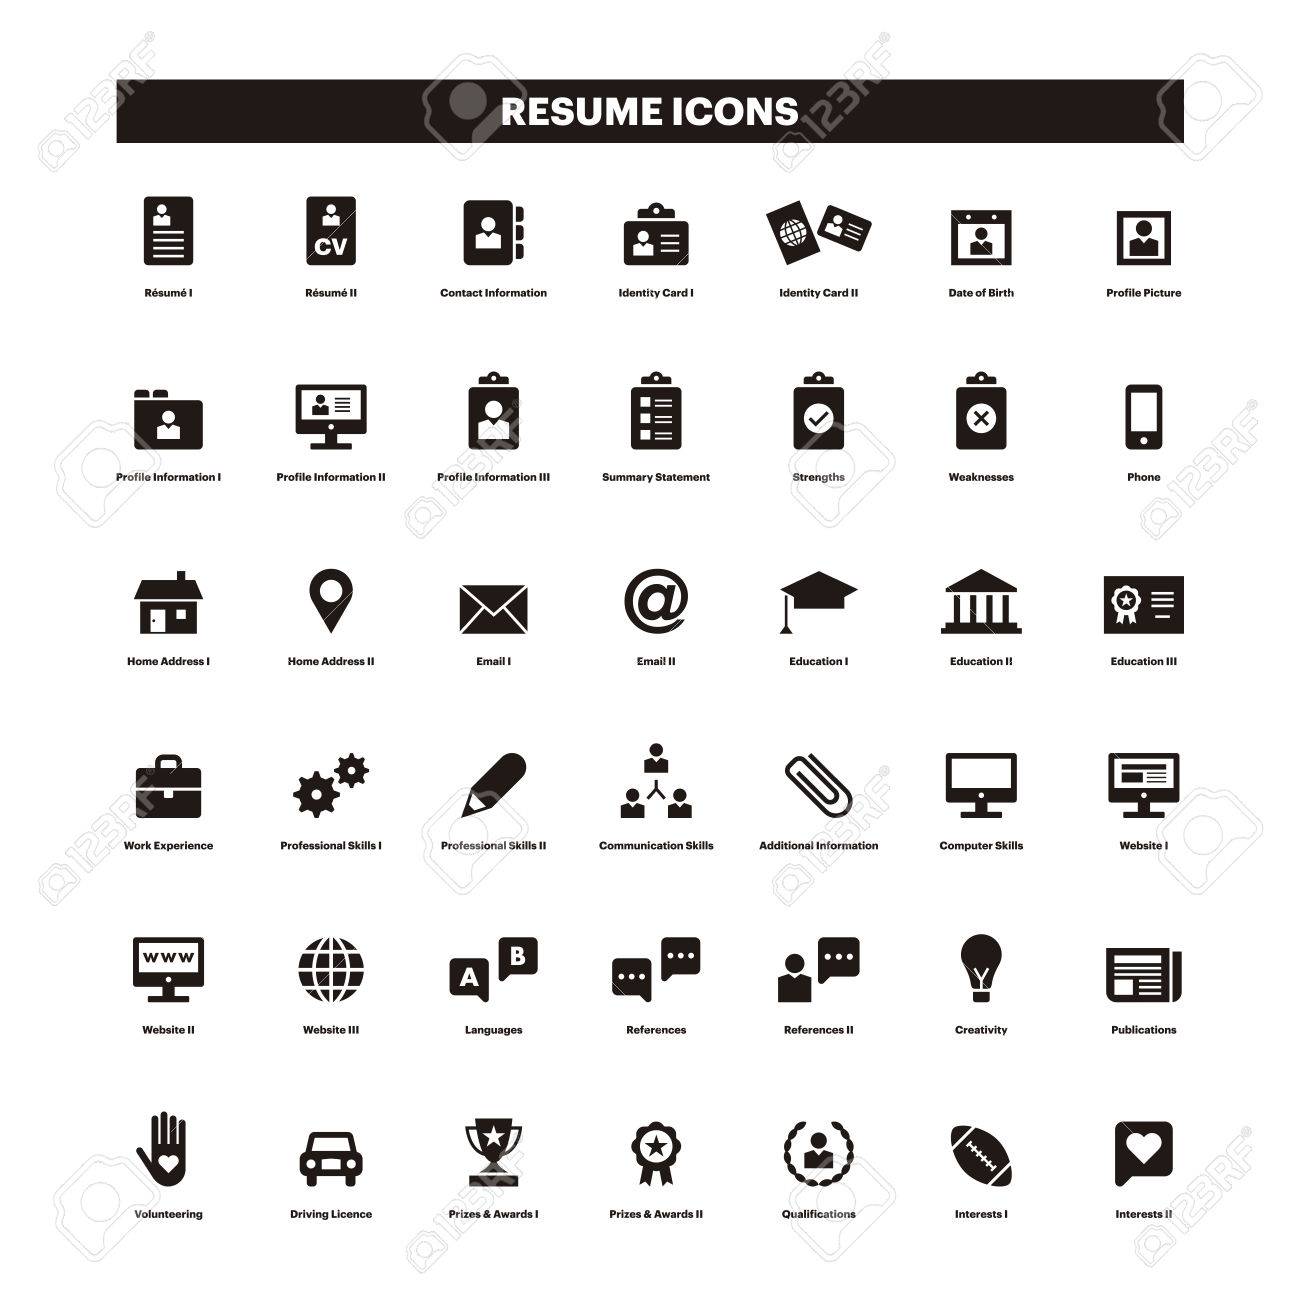 Resume Icon Free Vector Art - (30393 Free Downloads)